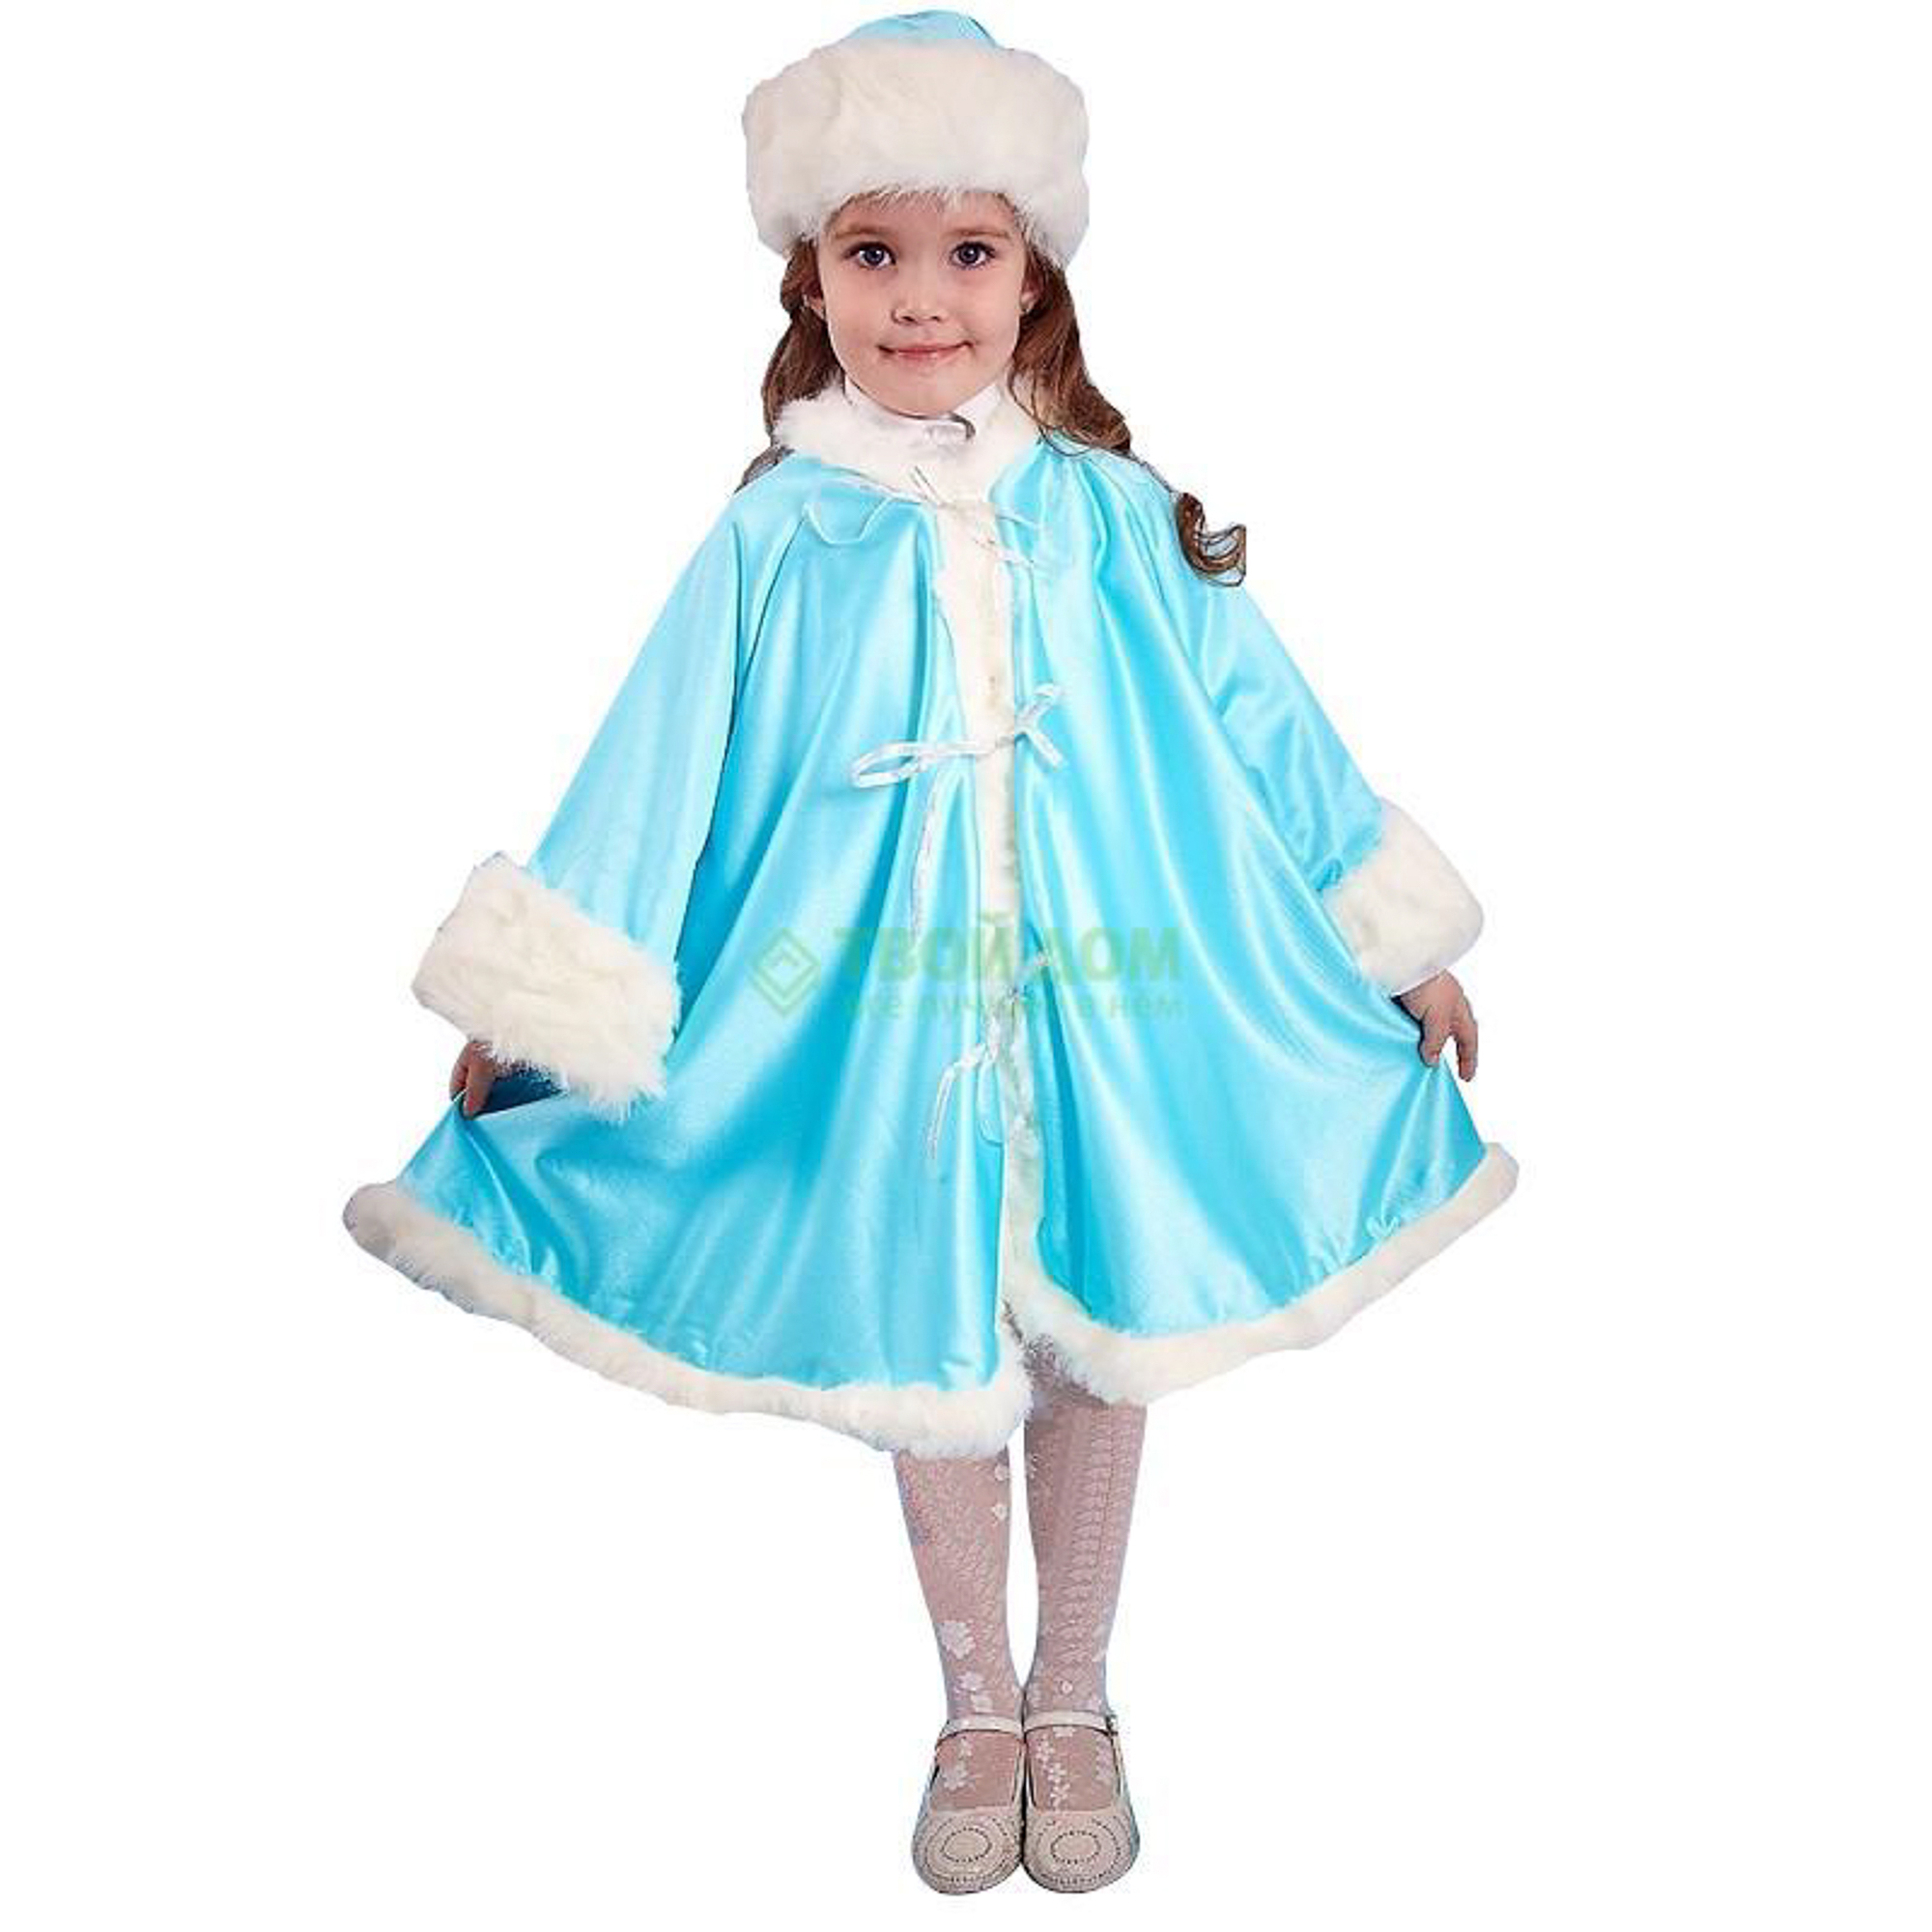 Артэ-Грим Карнавальный костюм снегурочка костюм карнавальный детский артэ грим снегурочка 34 36